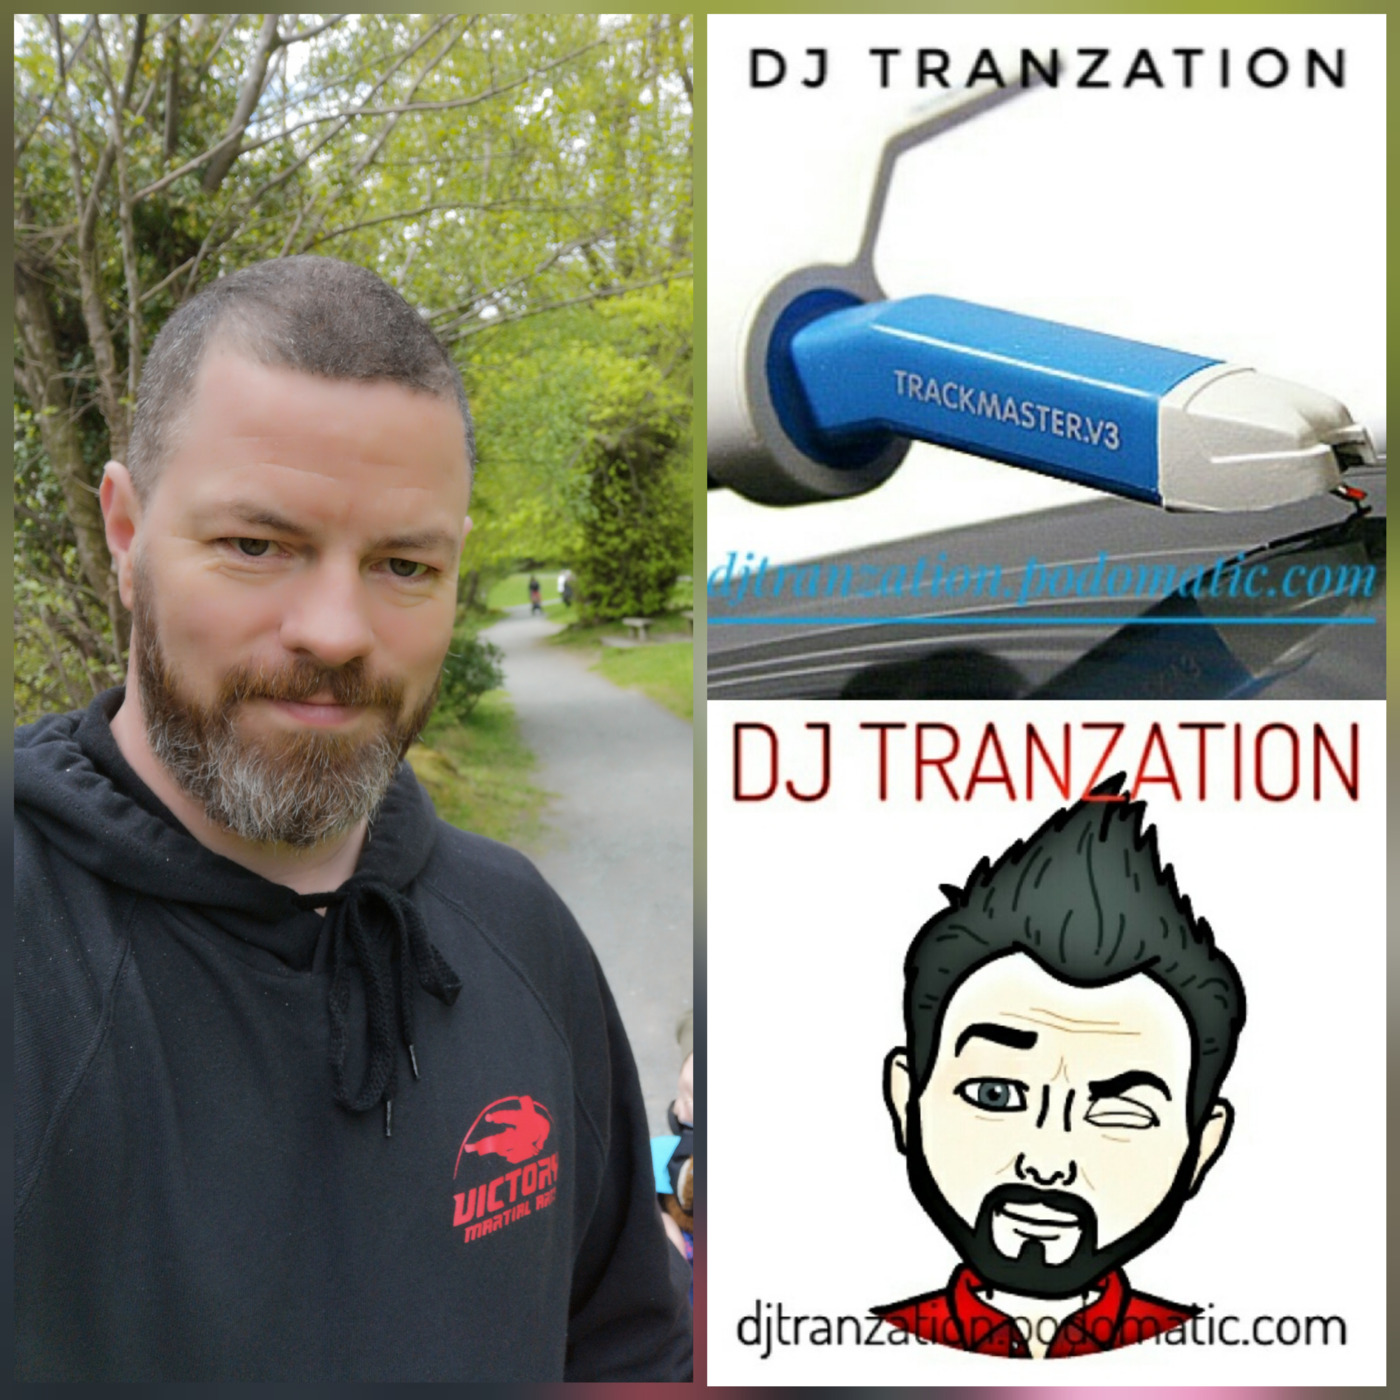 Stuart Coates AKA DJ Tranzation